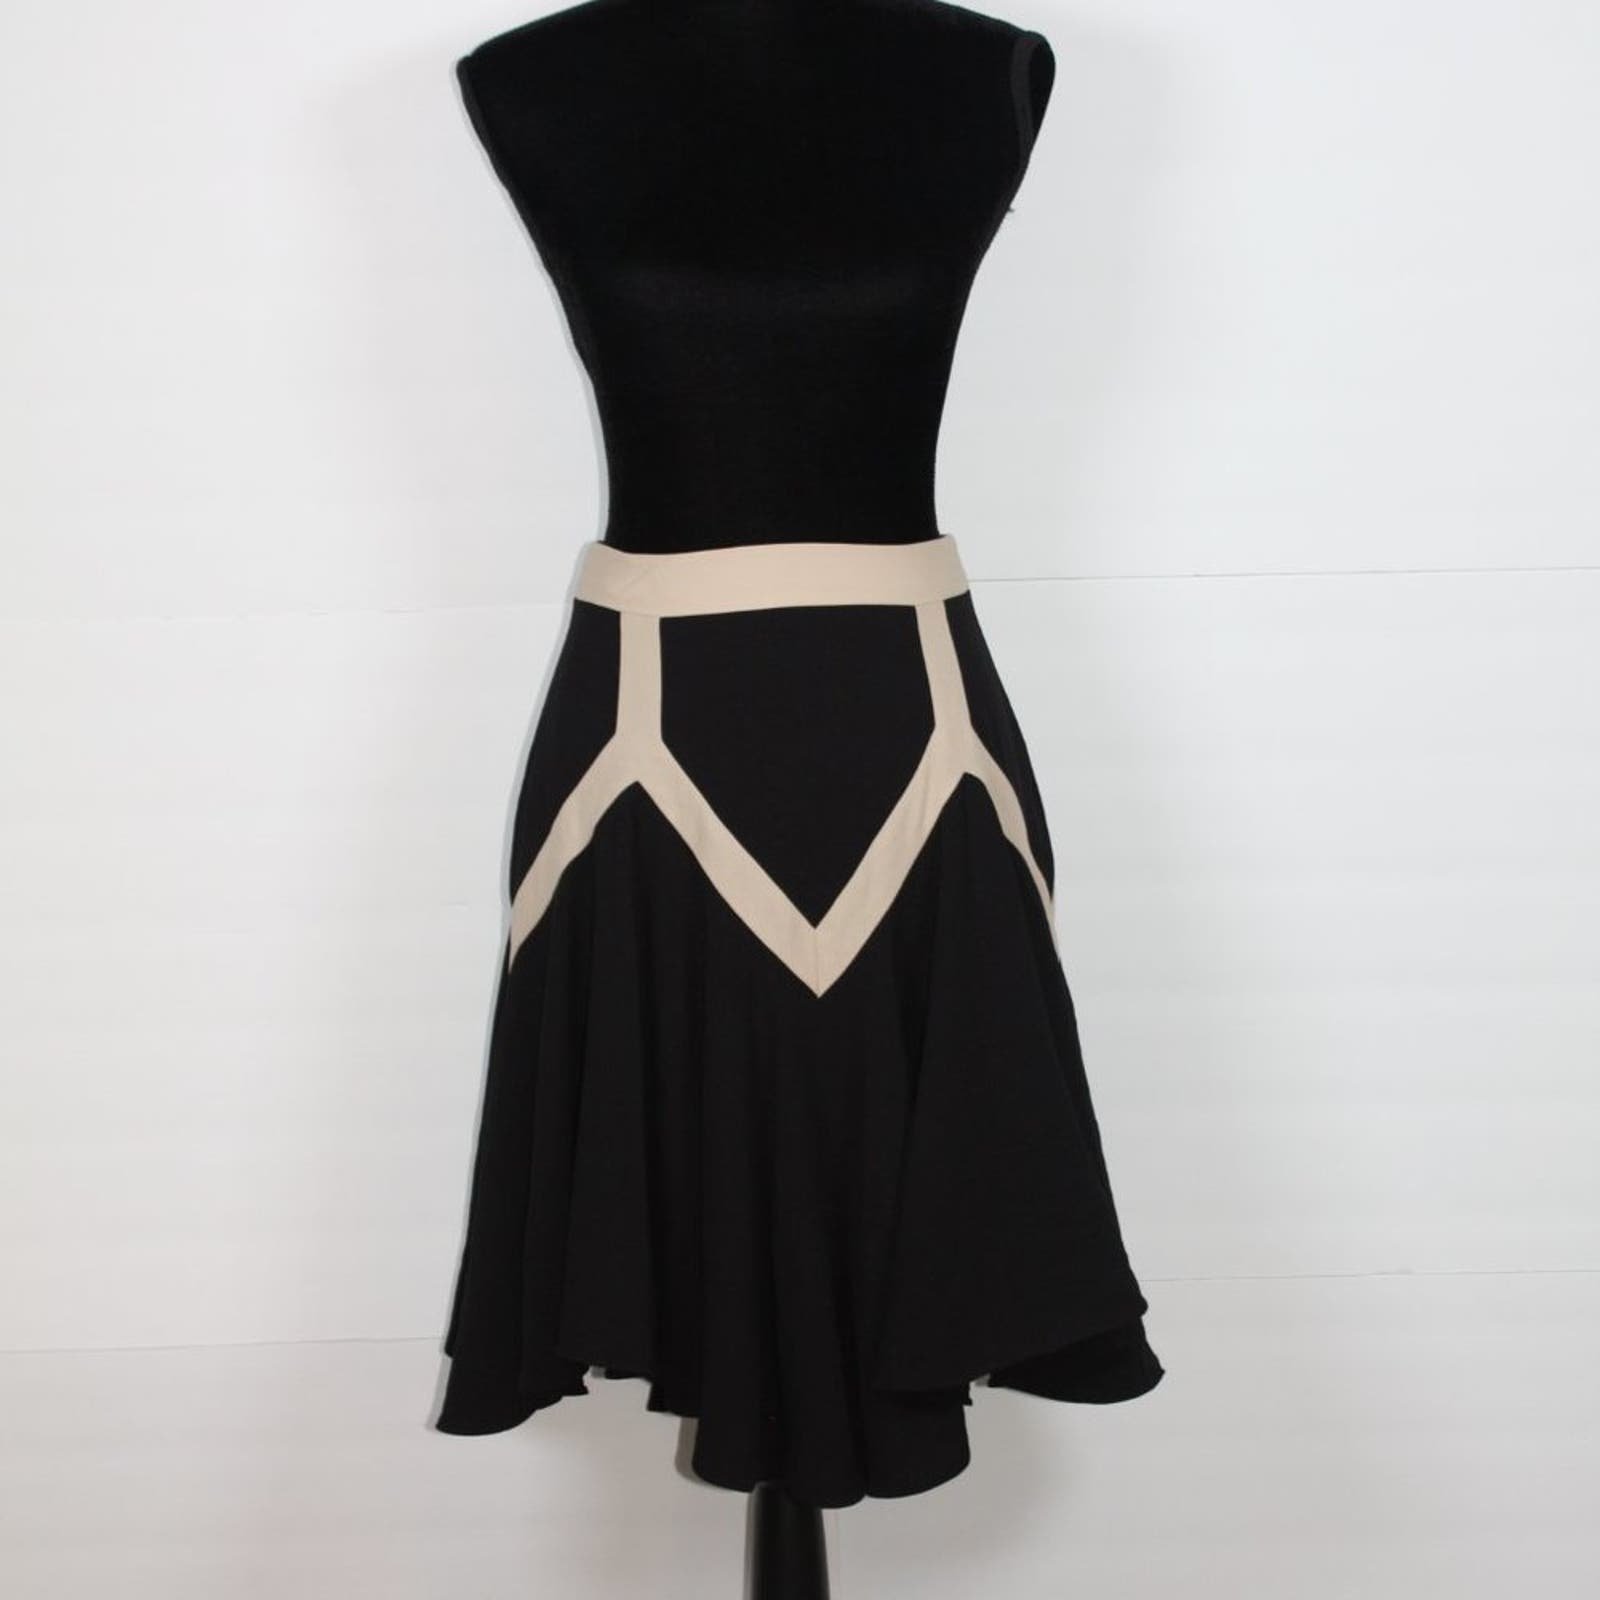 Latest  Leifsdottir Black Skirt with Geometric Design Size 4 oyL2ekCYn just for you